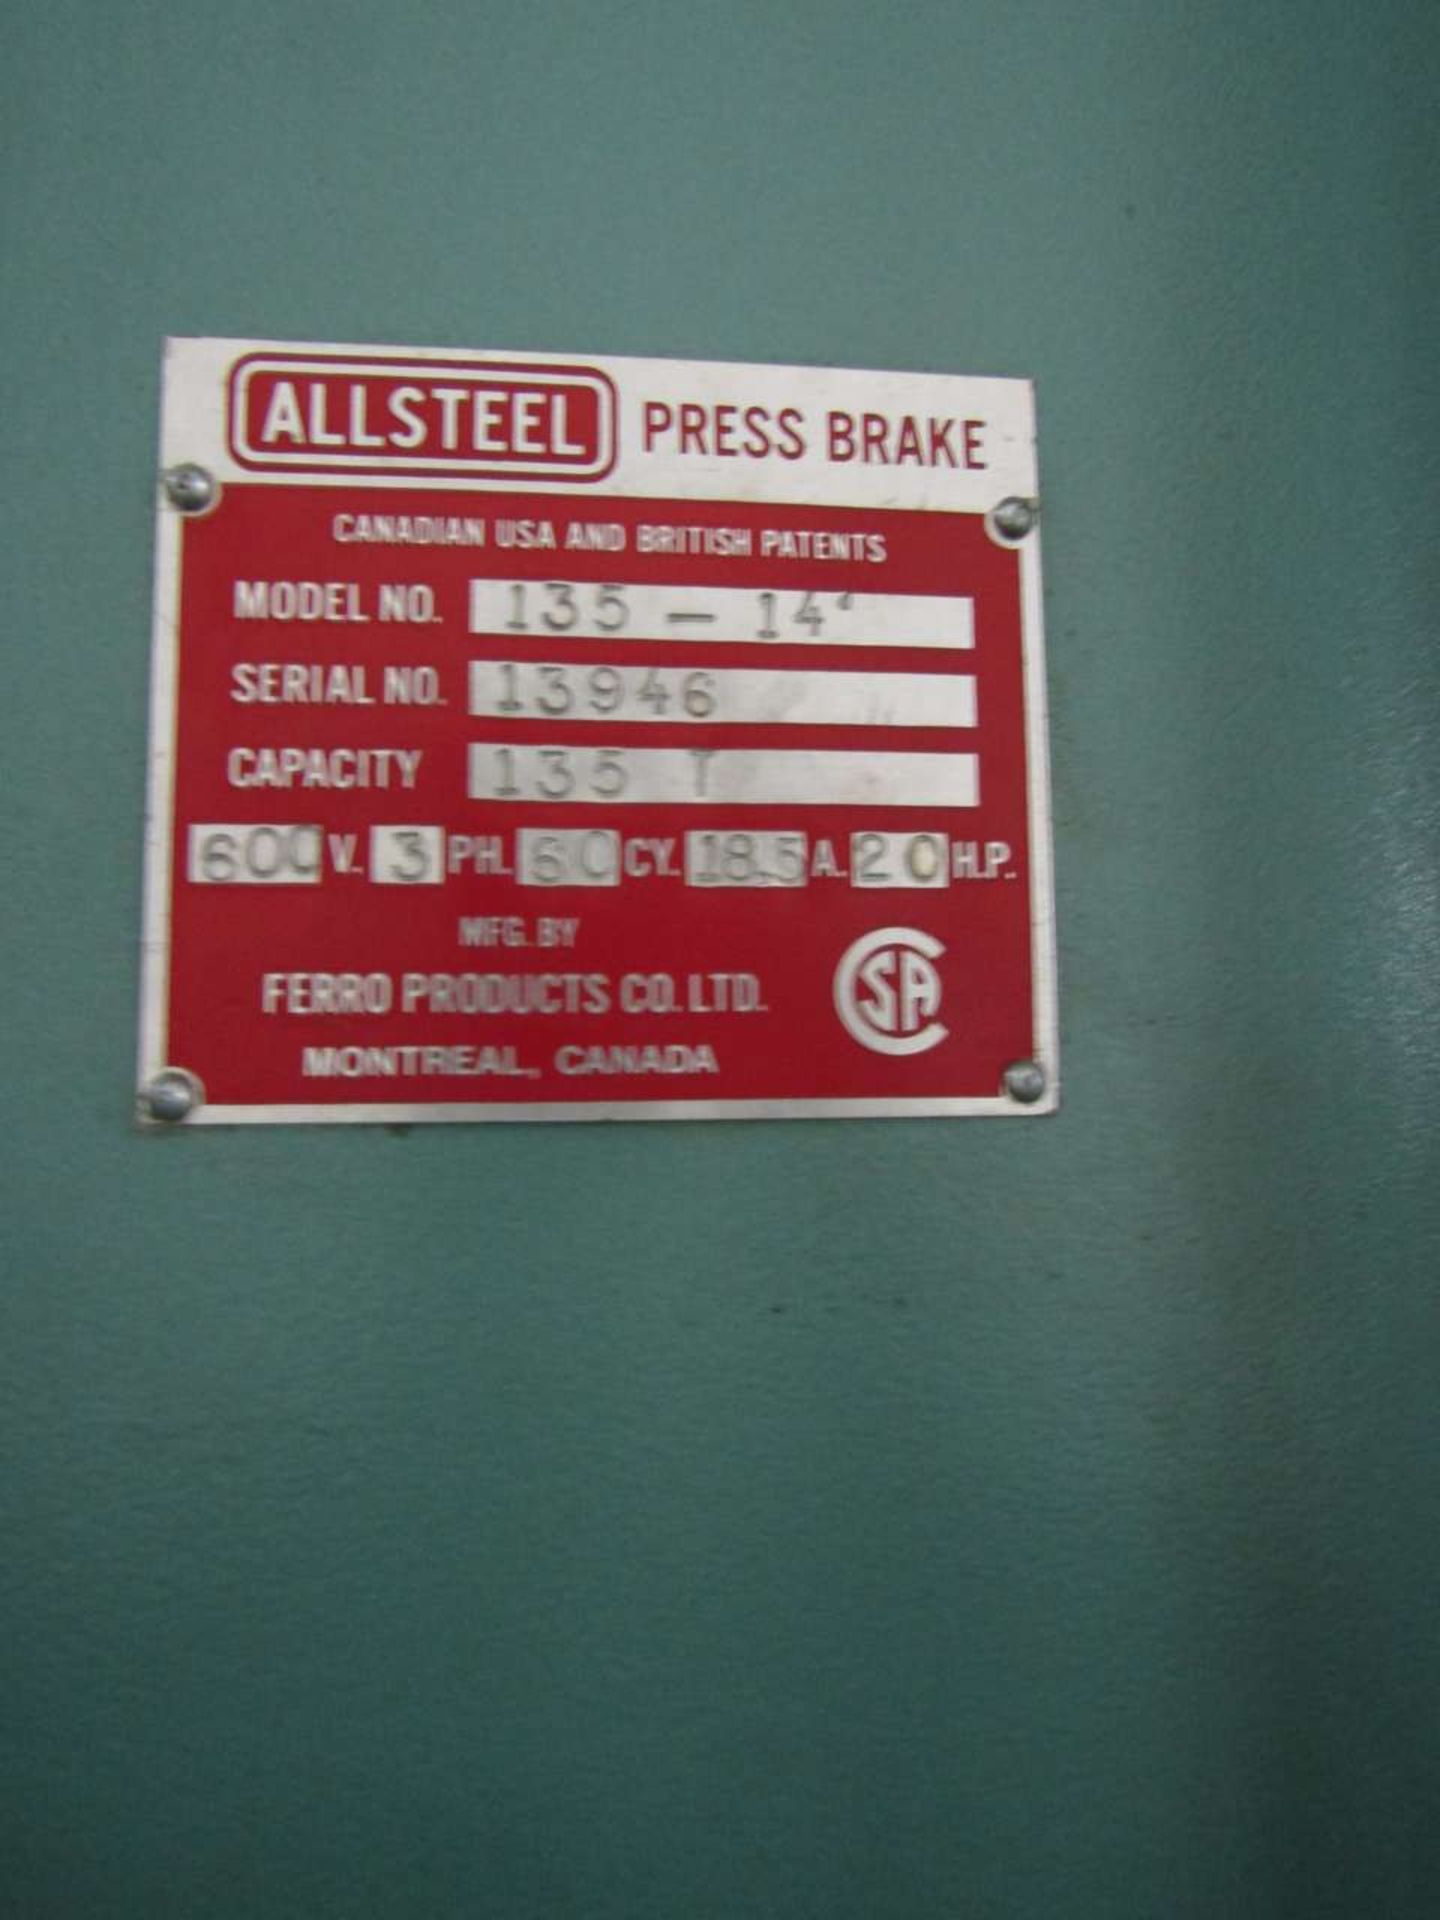 Allsteel 14' 135 Ton Press Brake - Image 4 of 4